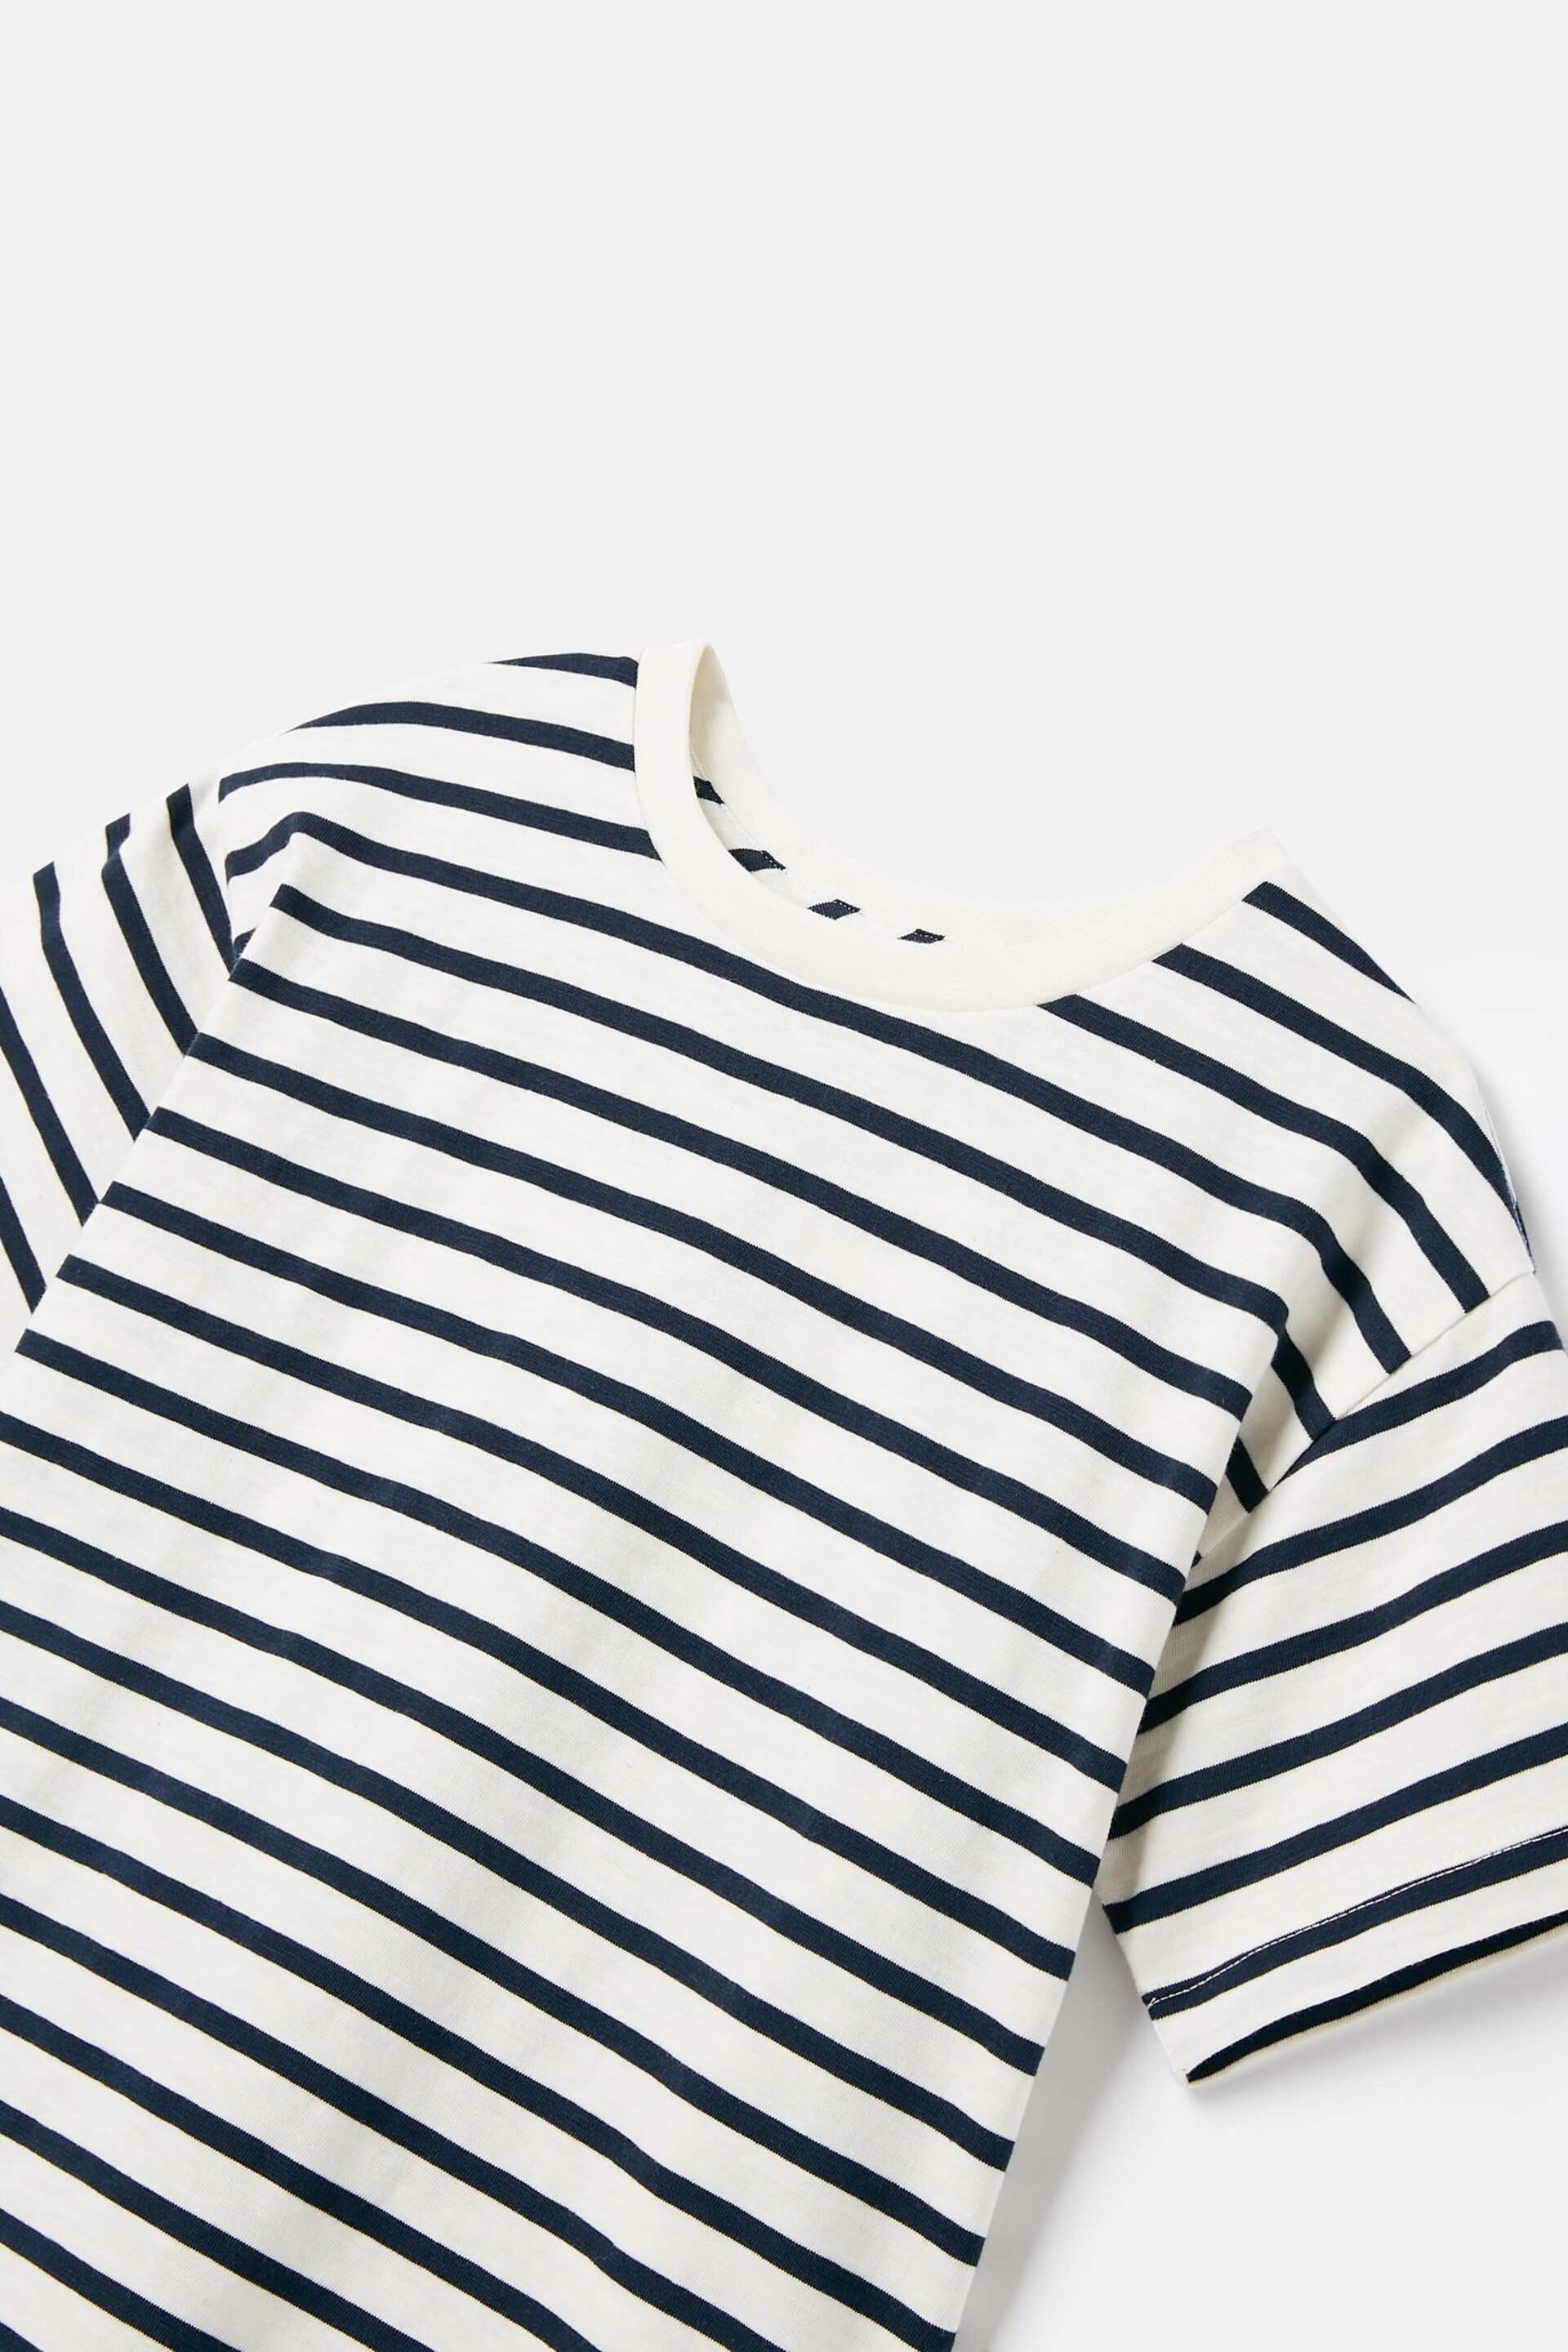 Joules Laundered Stripe Cream & Navy Short Sleeve Stripe T-Shirt - Image 3 of 5